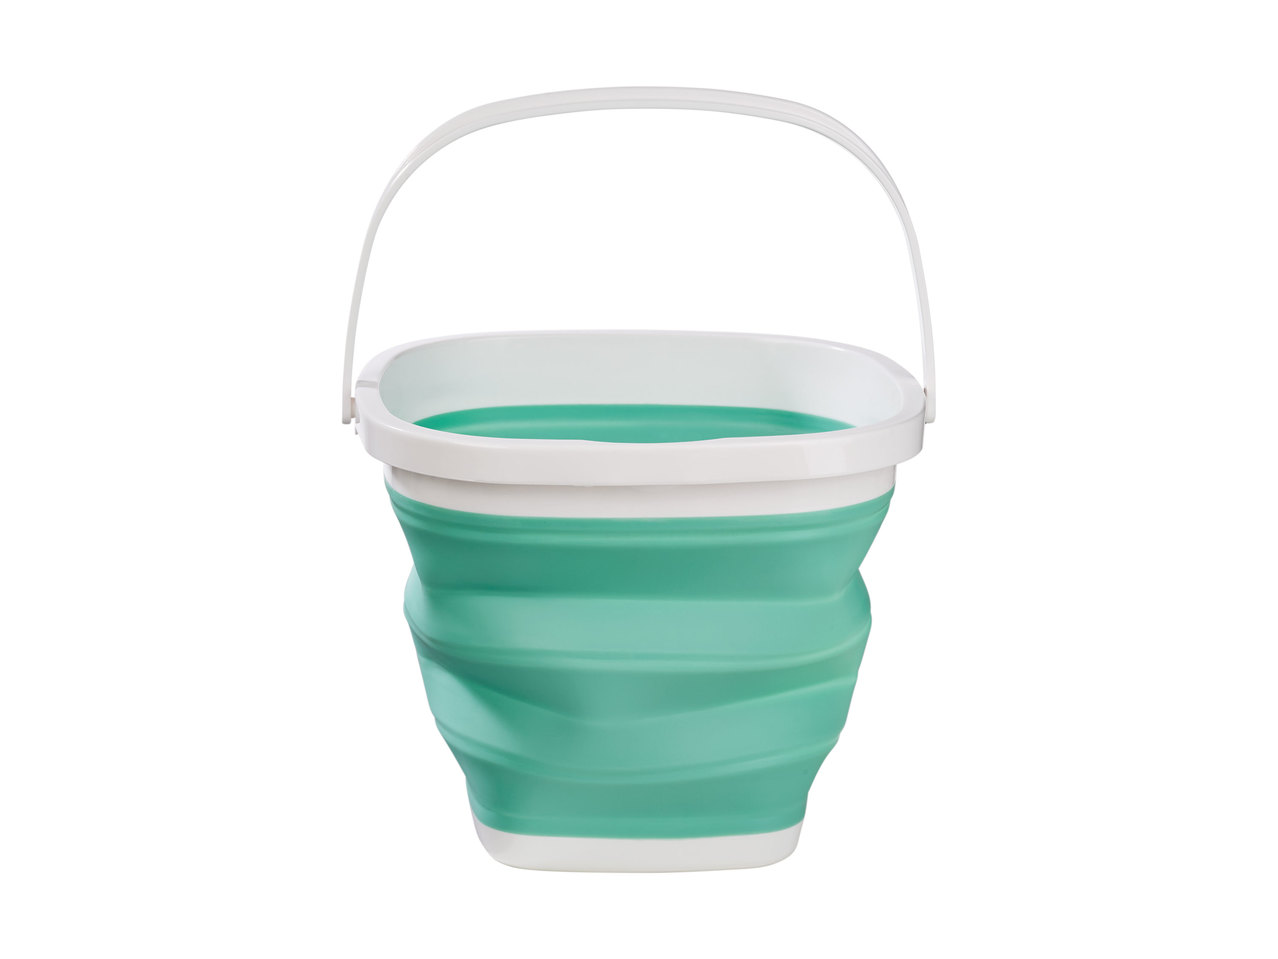 Aquapur Collapsible Basket or Bucket1